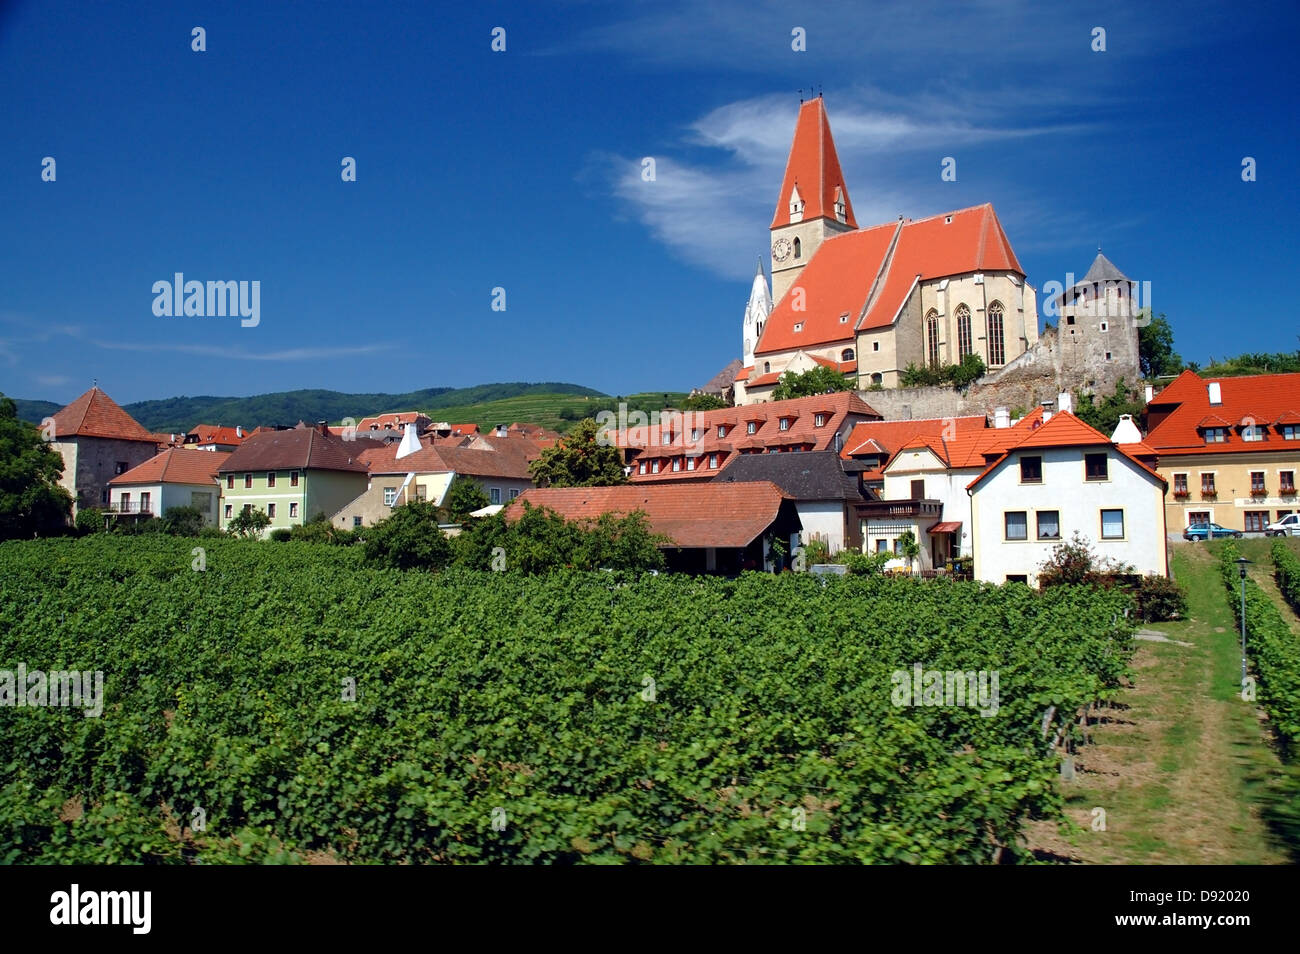 Vineyards surrounding the old town of Weisskirchen, in the Wachau region of Austria Stock Photo